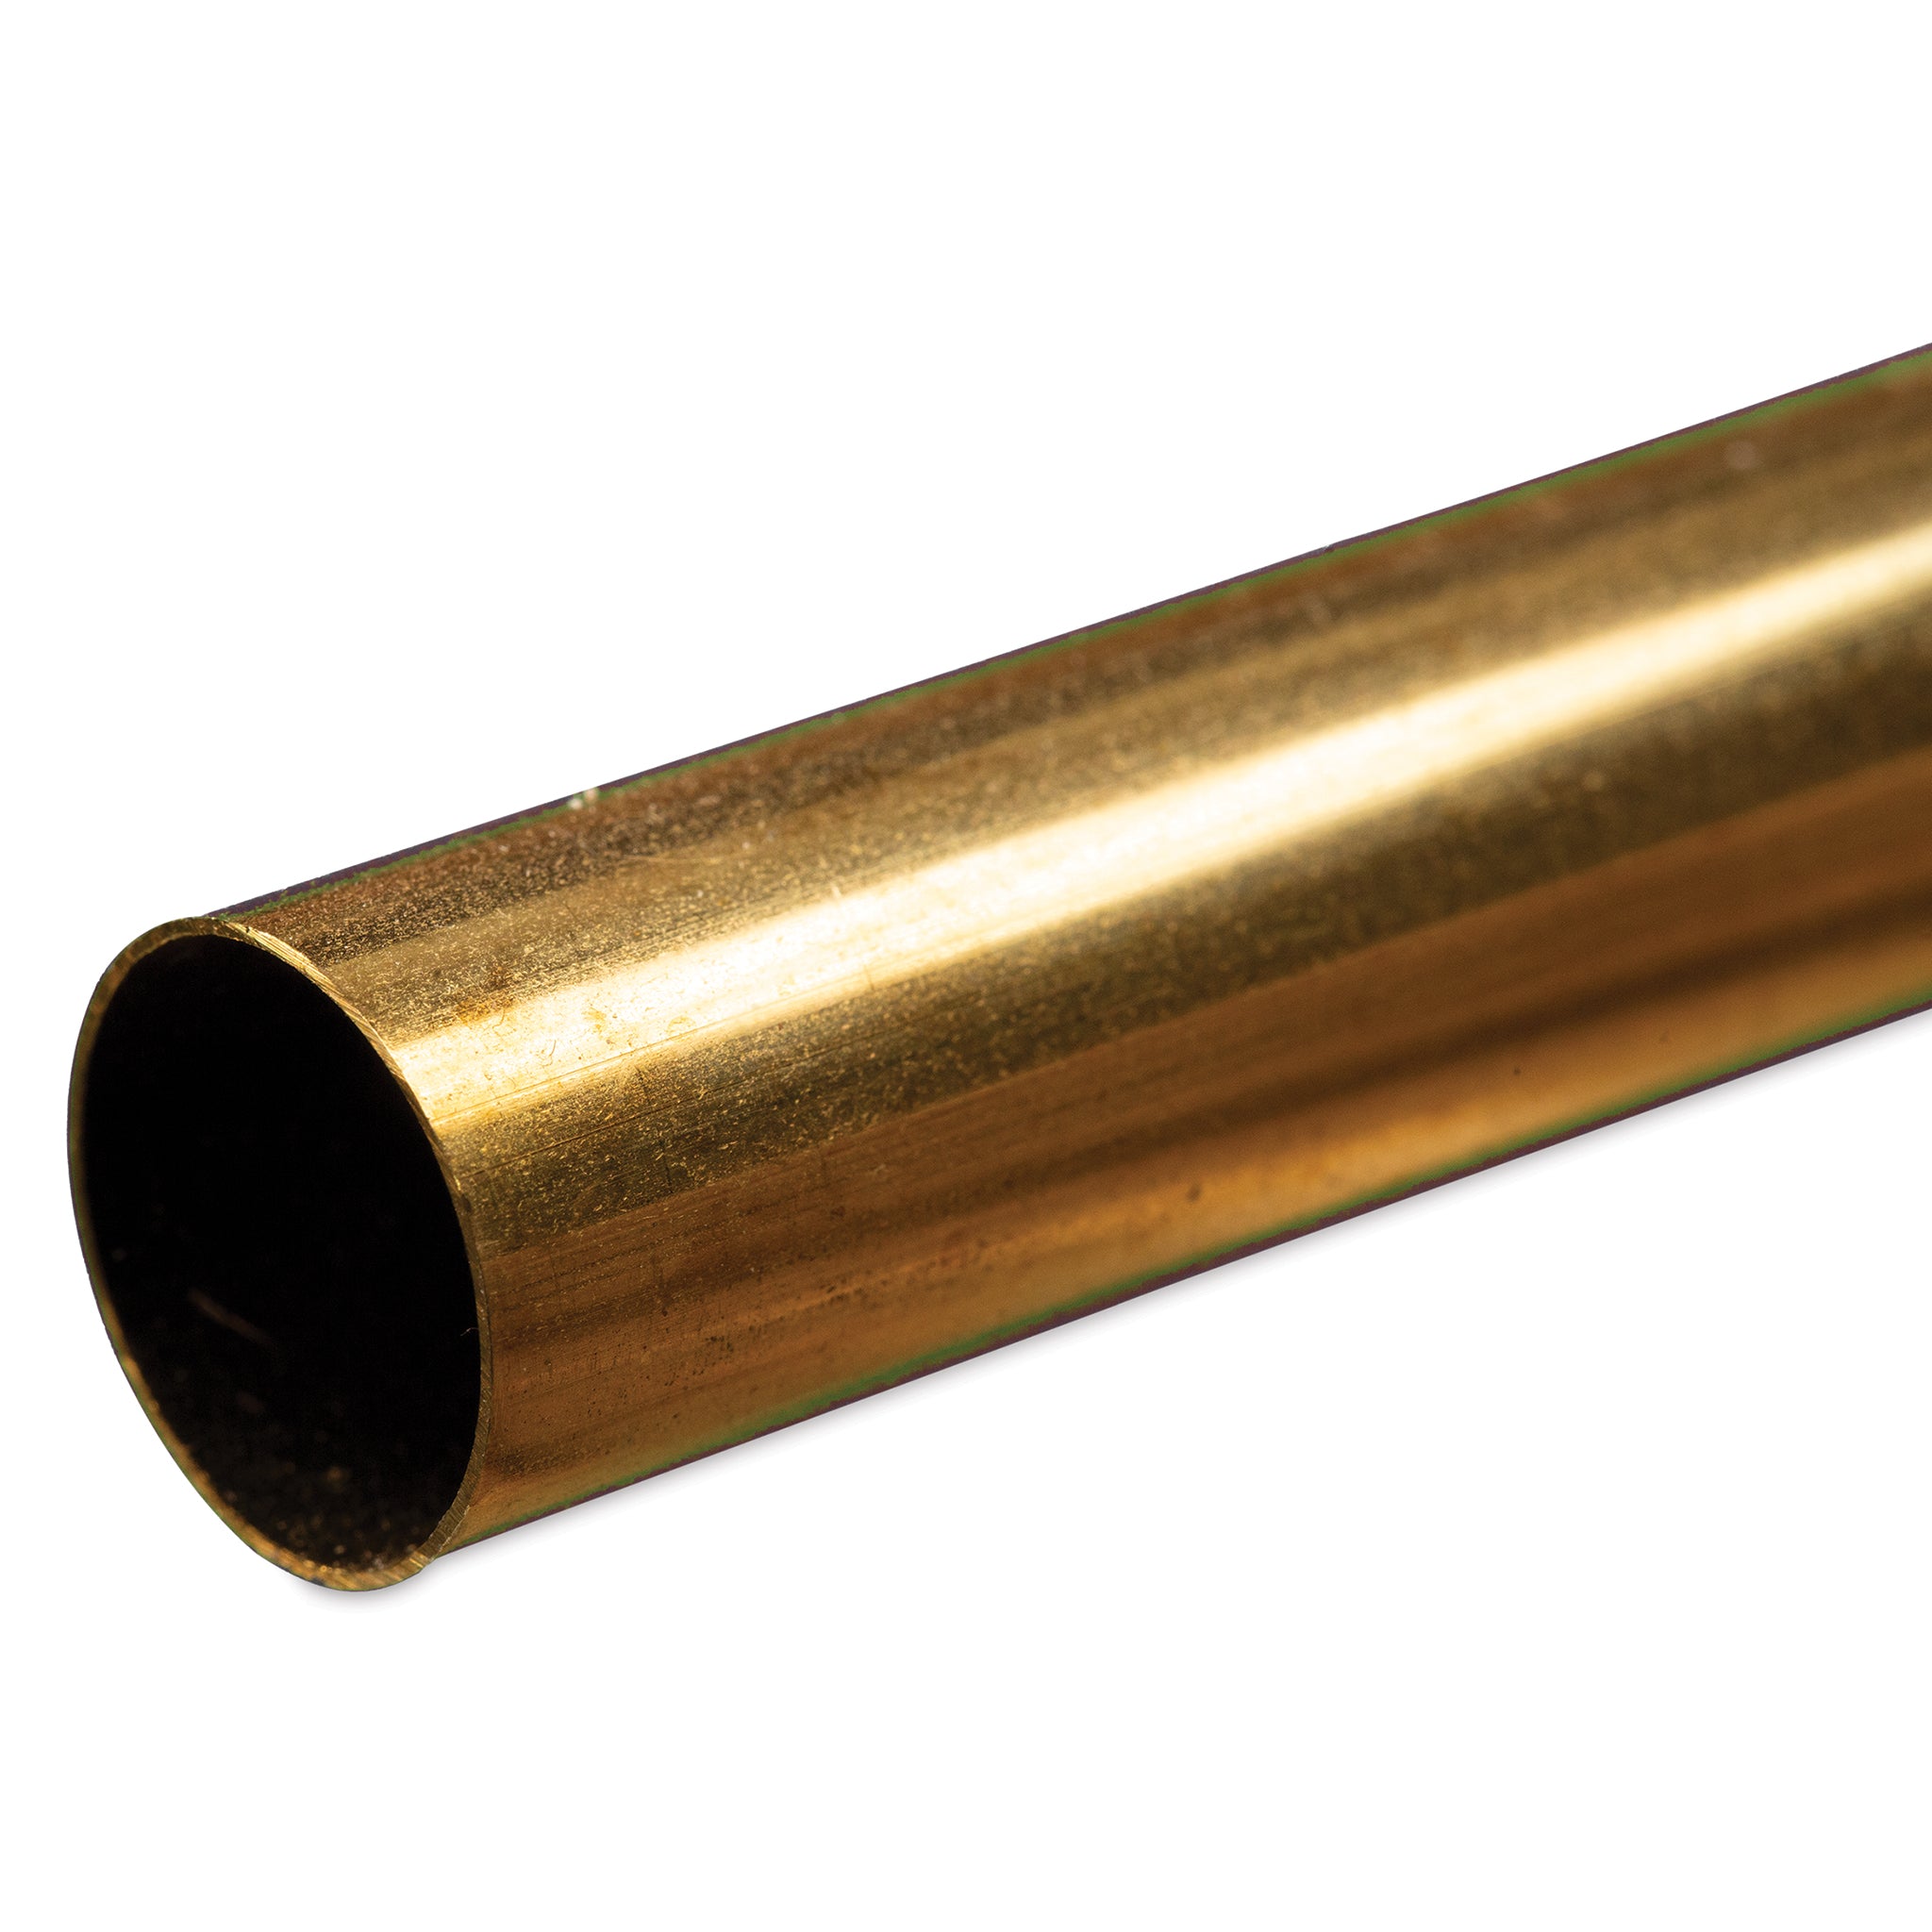 K&S Metals 8136 Round Brass Tube 13/32" OD x 0.014" Wall x 12" Long (1 Piece)